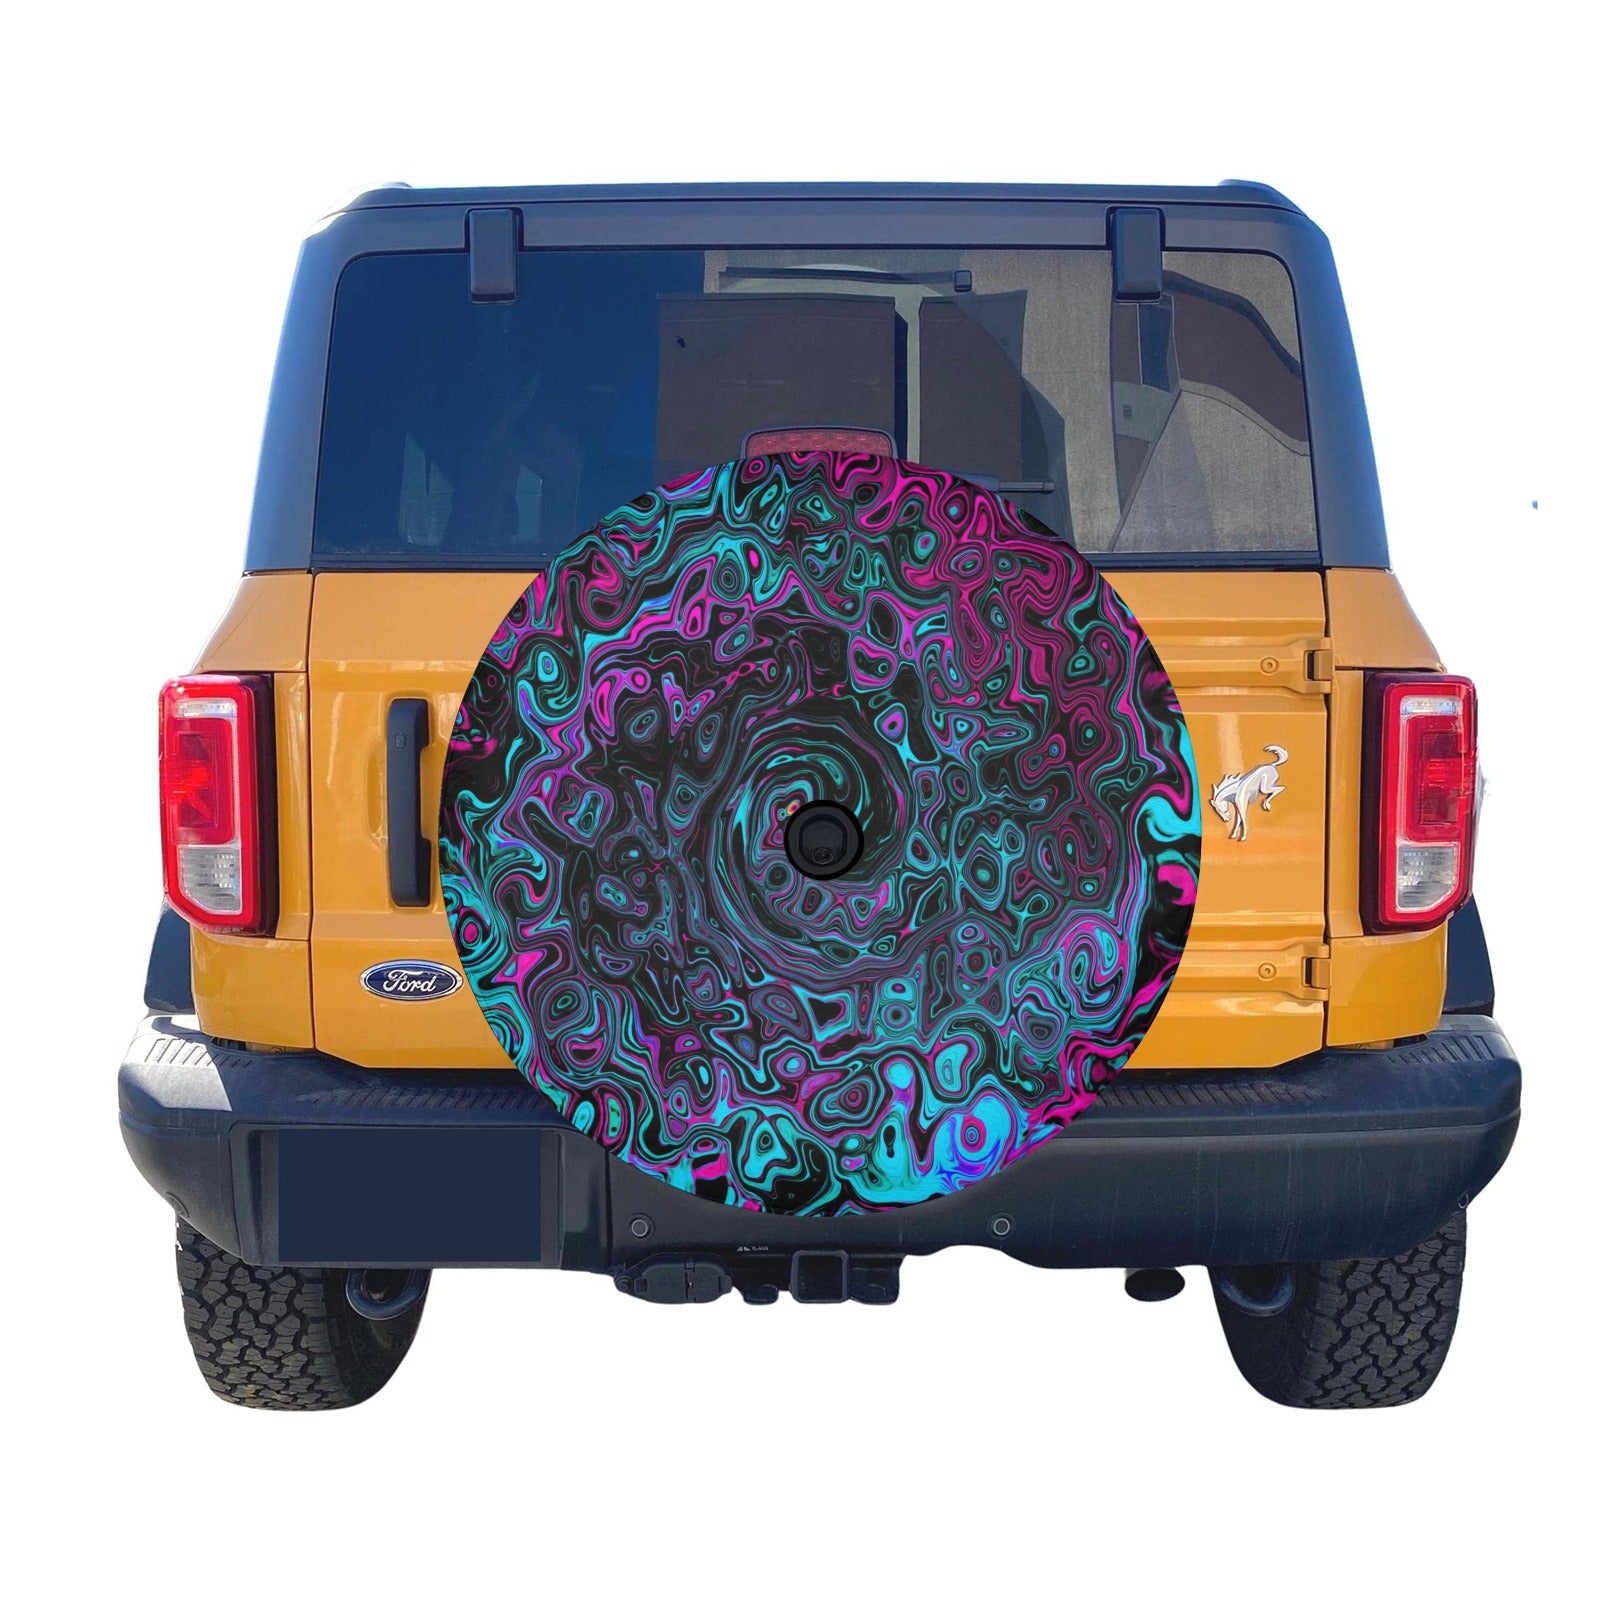 Spare Tire Cover with Backup Camera Hole - Retro Aqua Magenta and Black Abstract Swirl - Small